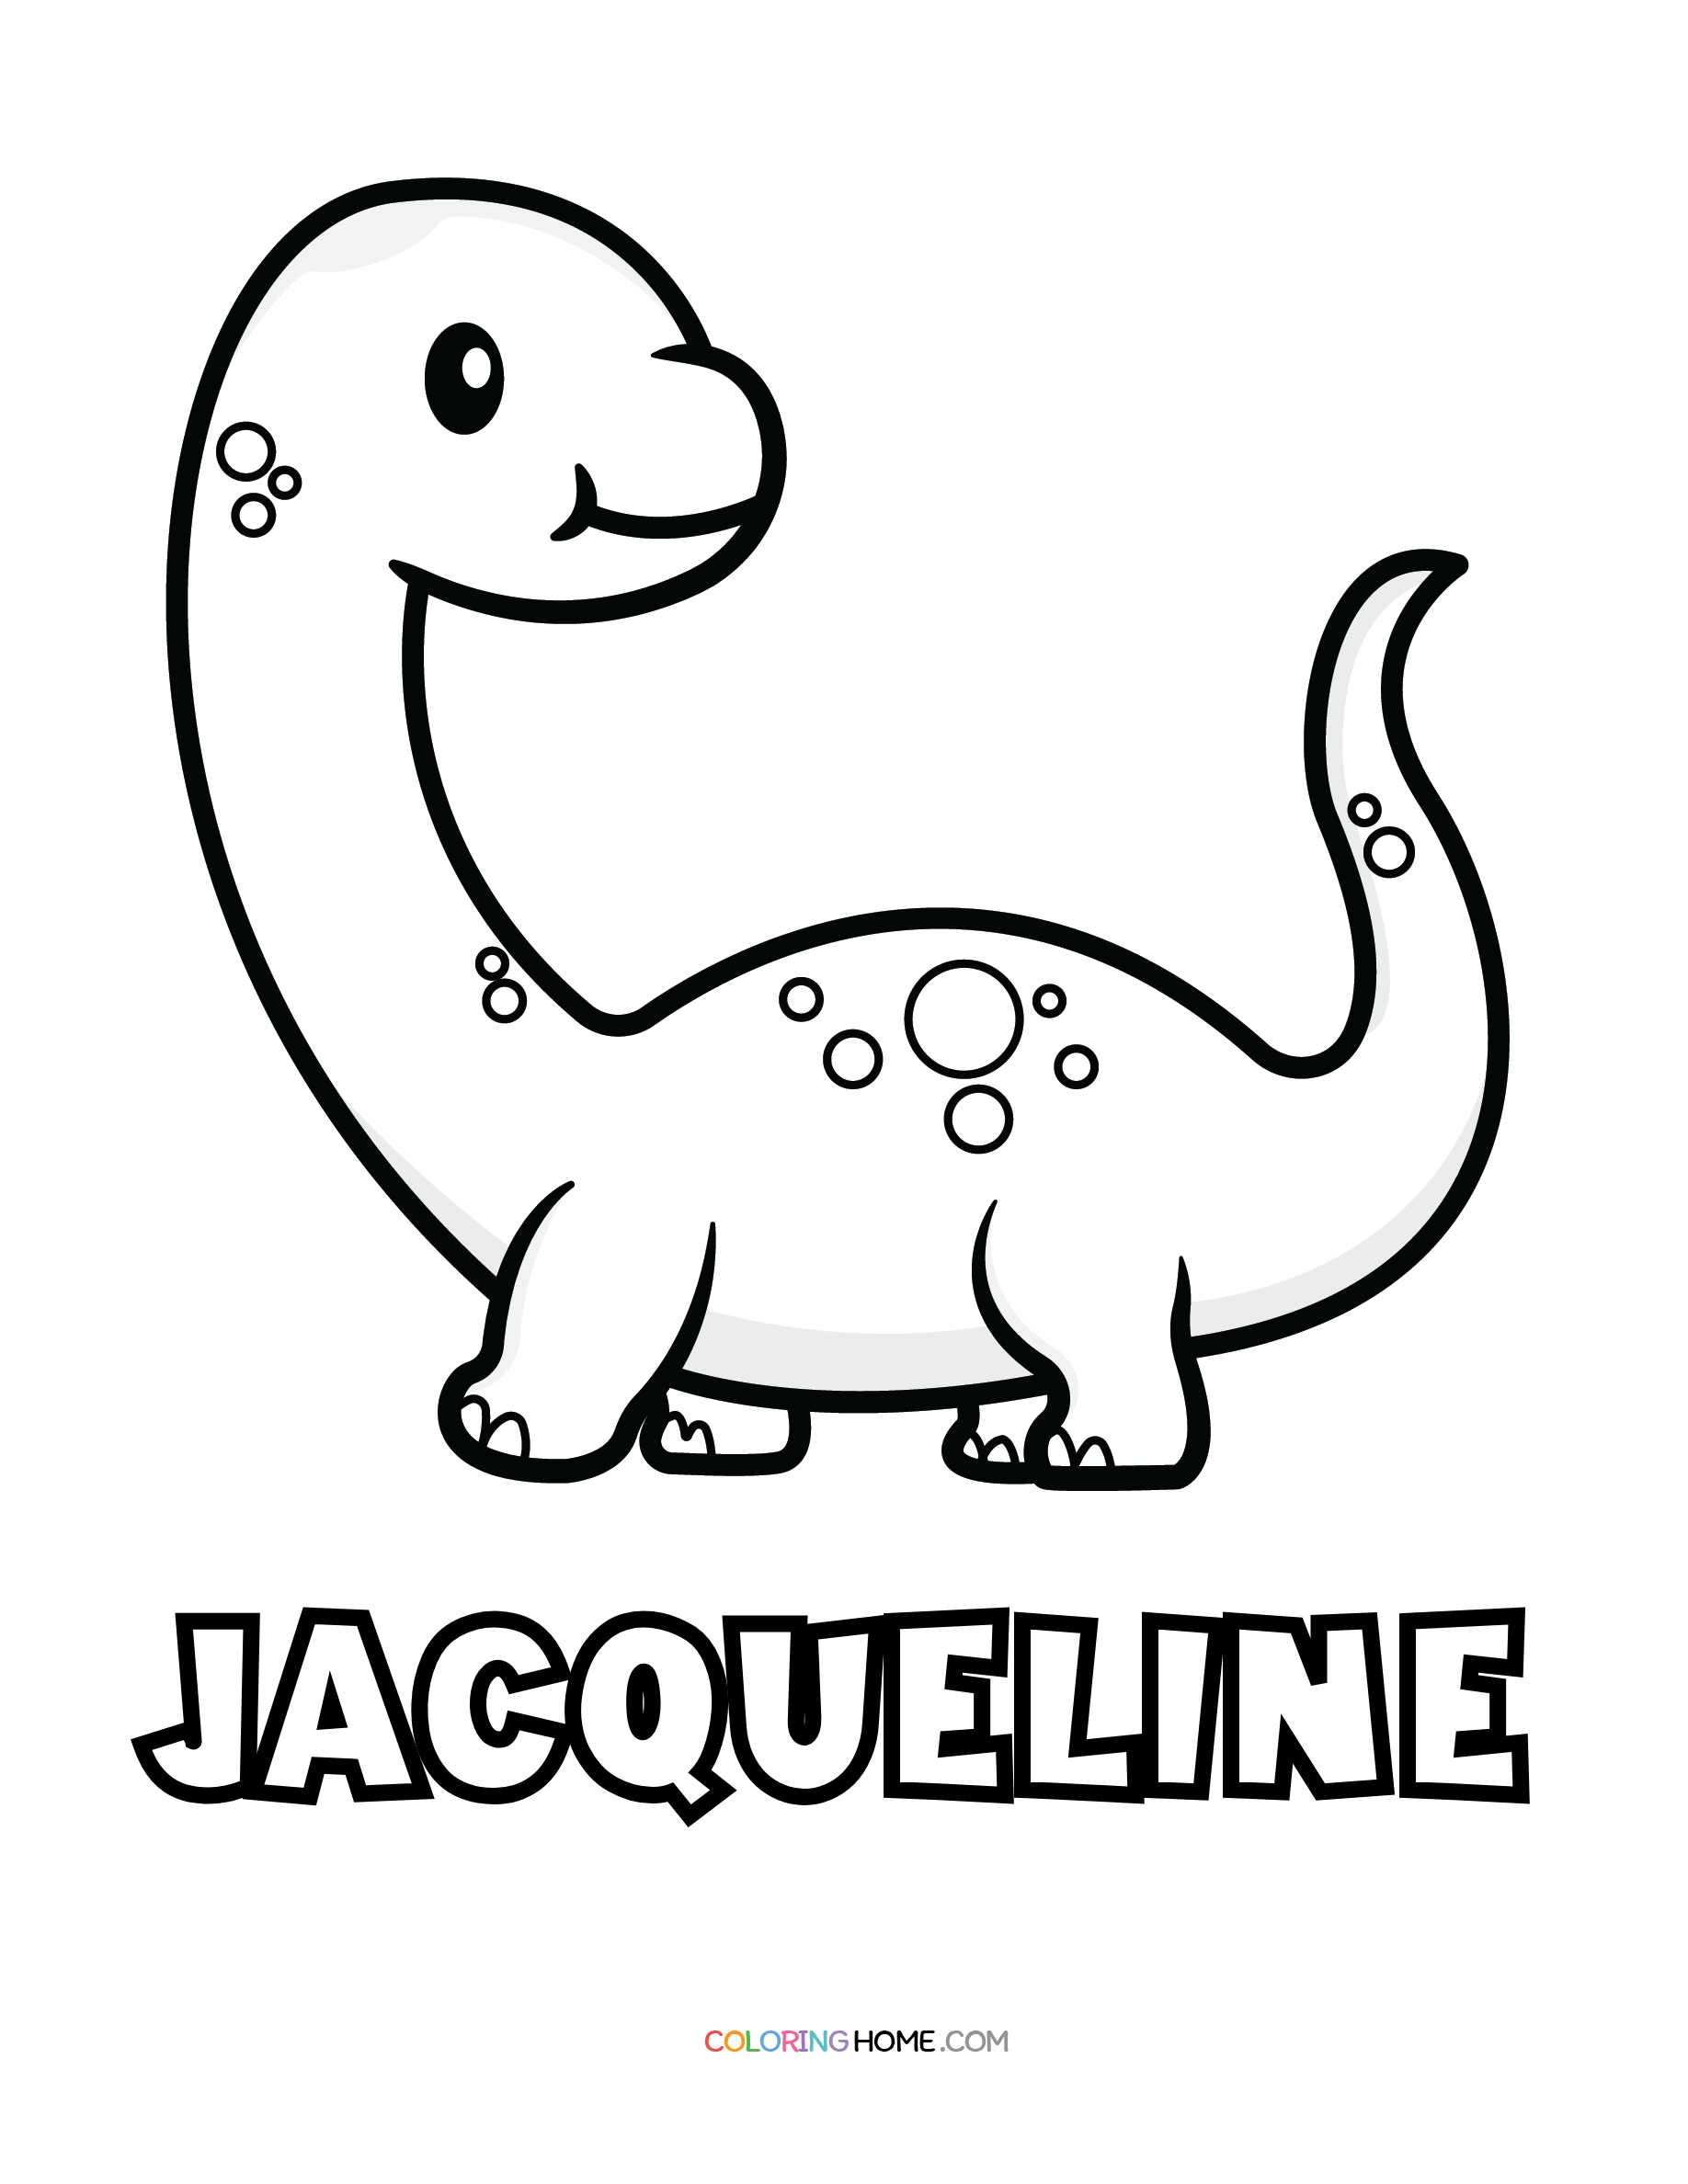 Jacqueline dinosaur coloring page